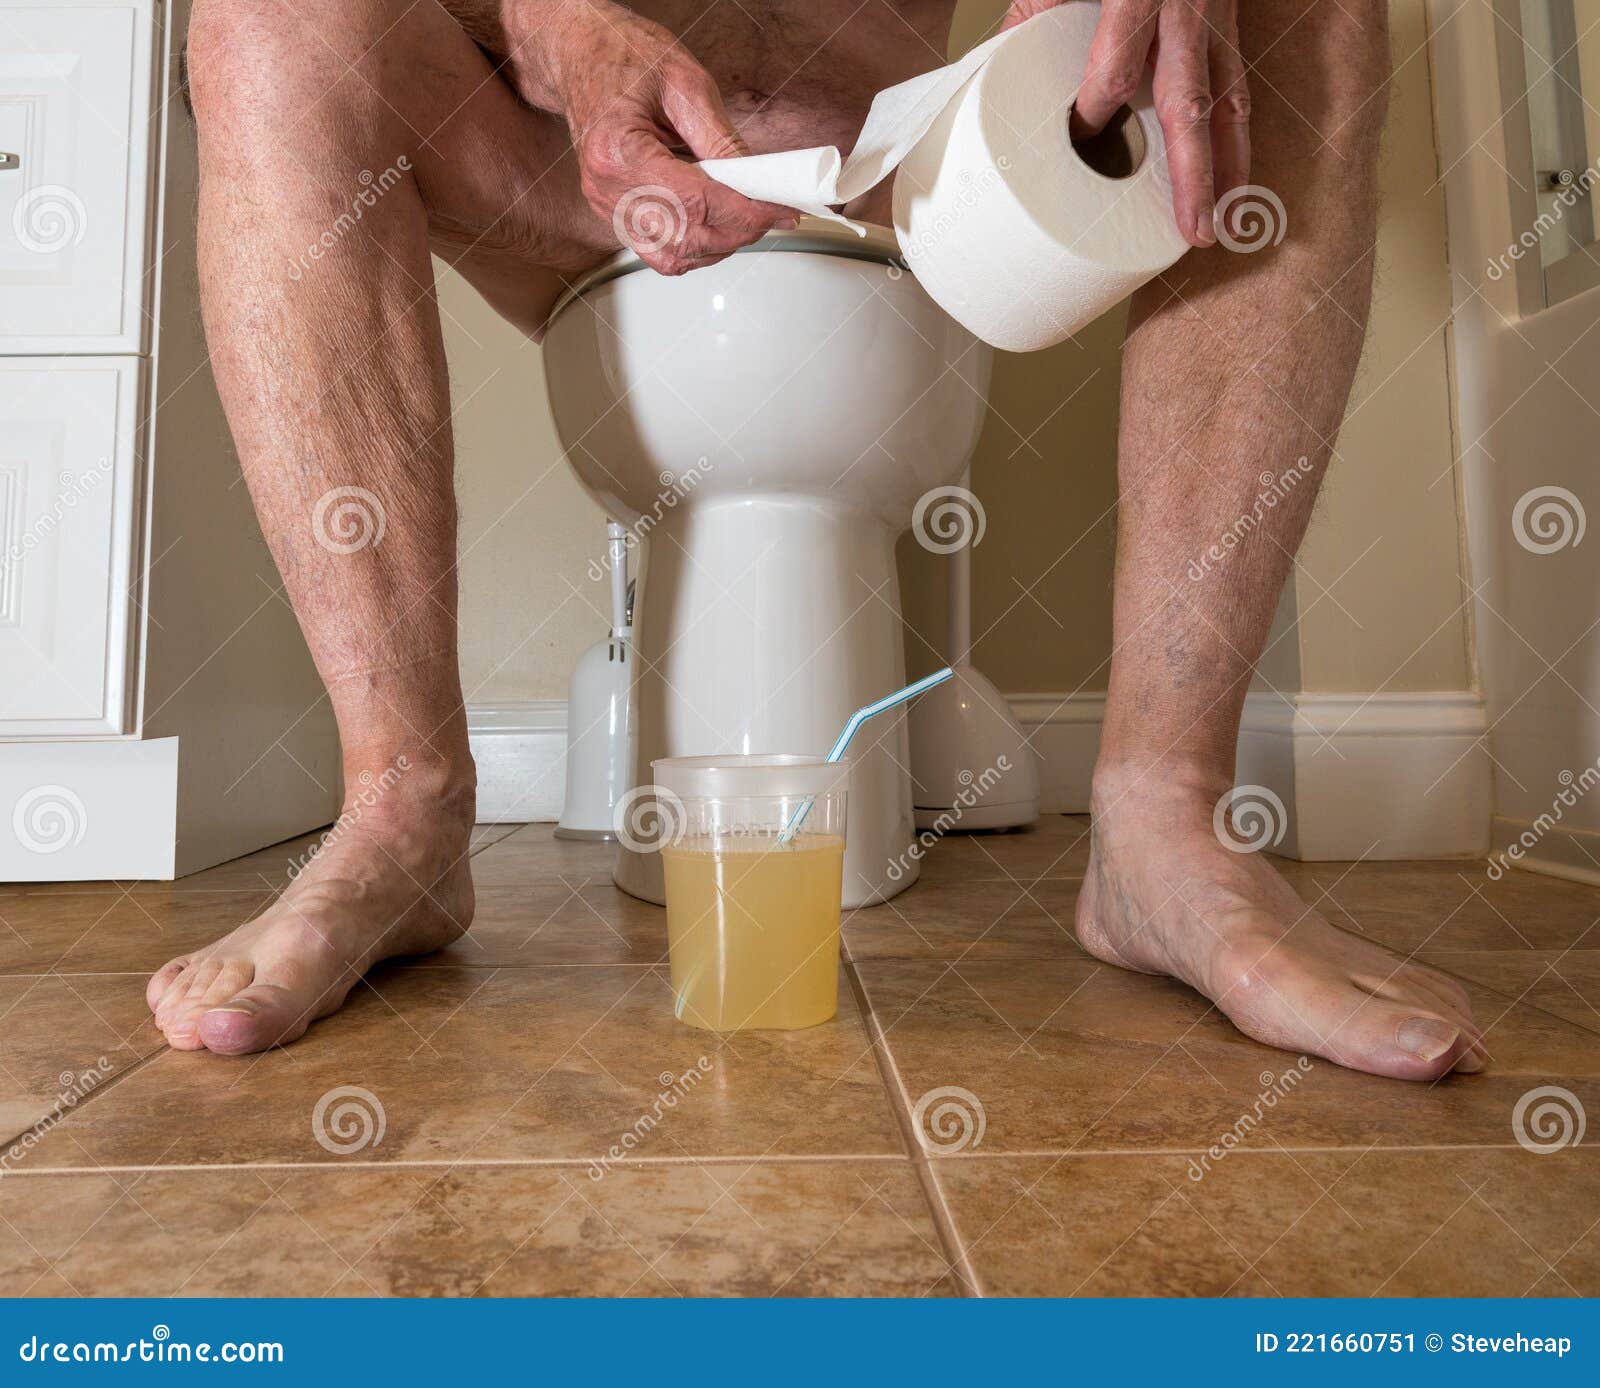 close-up-legs-senior-caucasian-adult-sitting-toilet-preparing-colonoscopy-medication-senior-adult-man-sitting-221660751.jpg